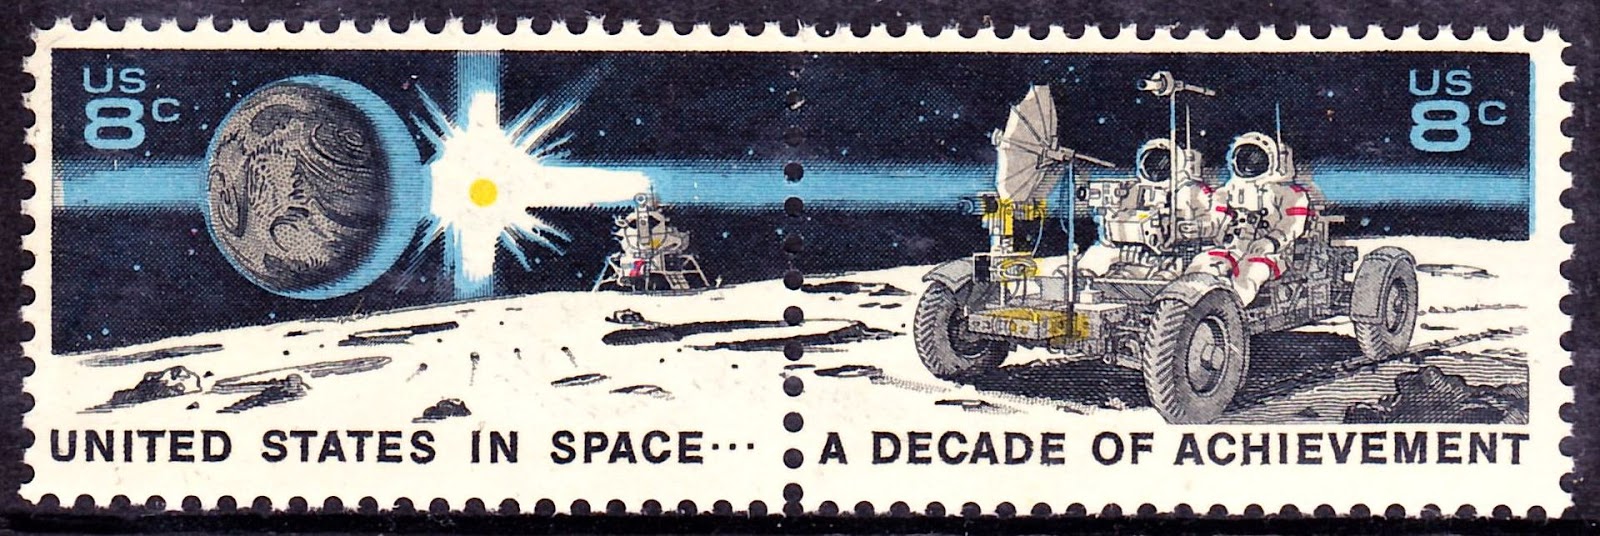 Moon_Landing_1971_Issue-8c.jpg